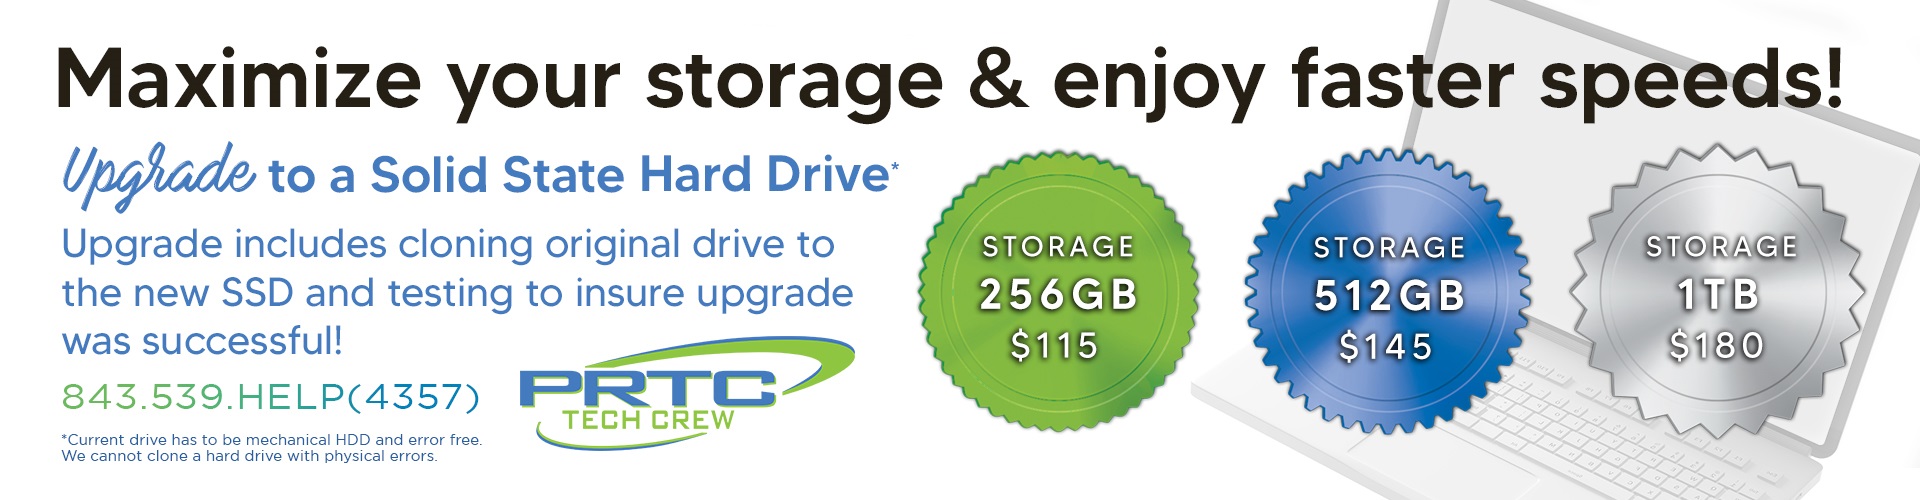 Maximize your storage